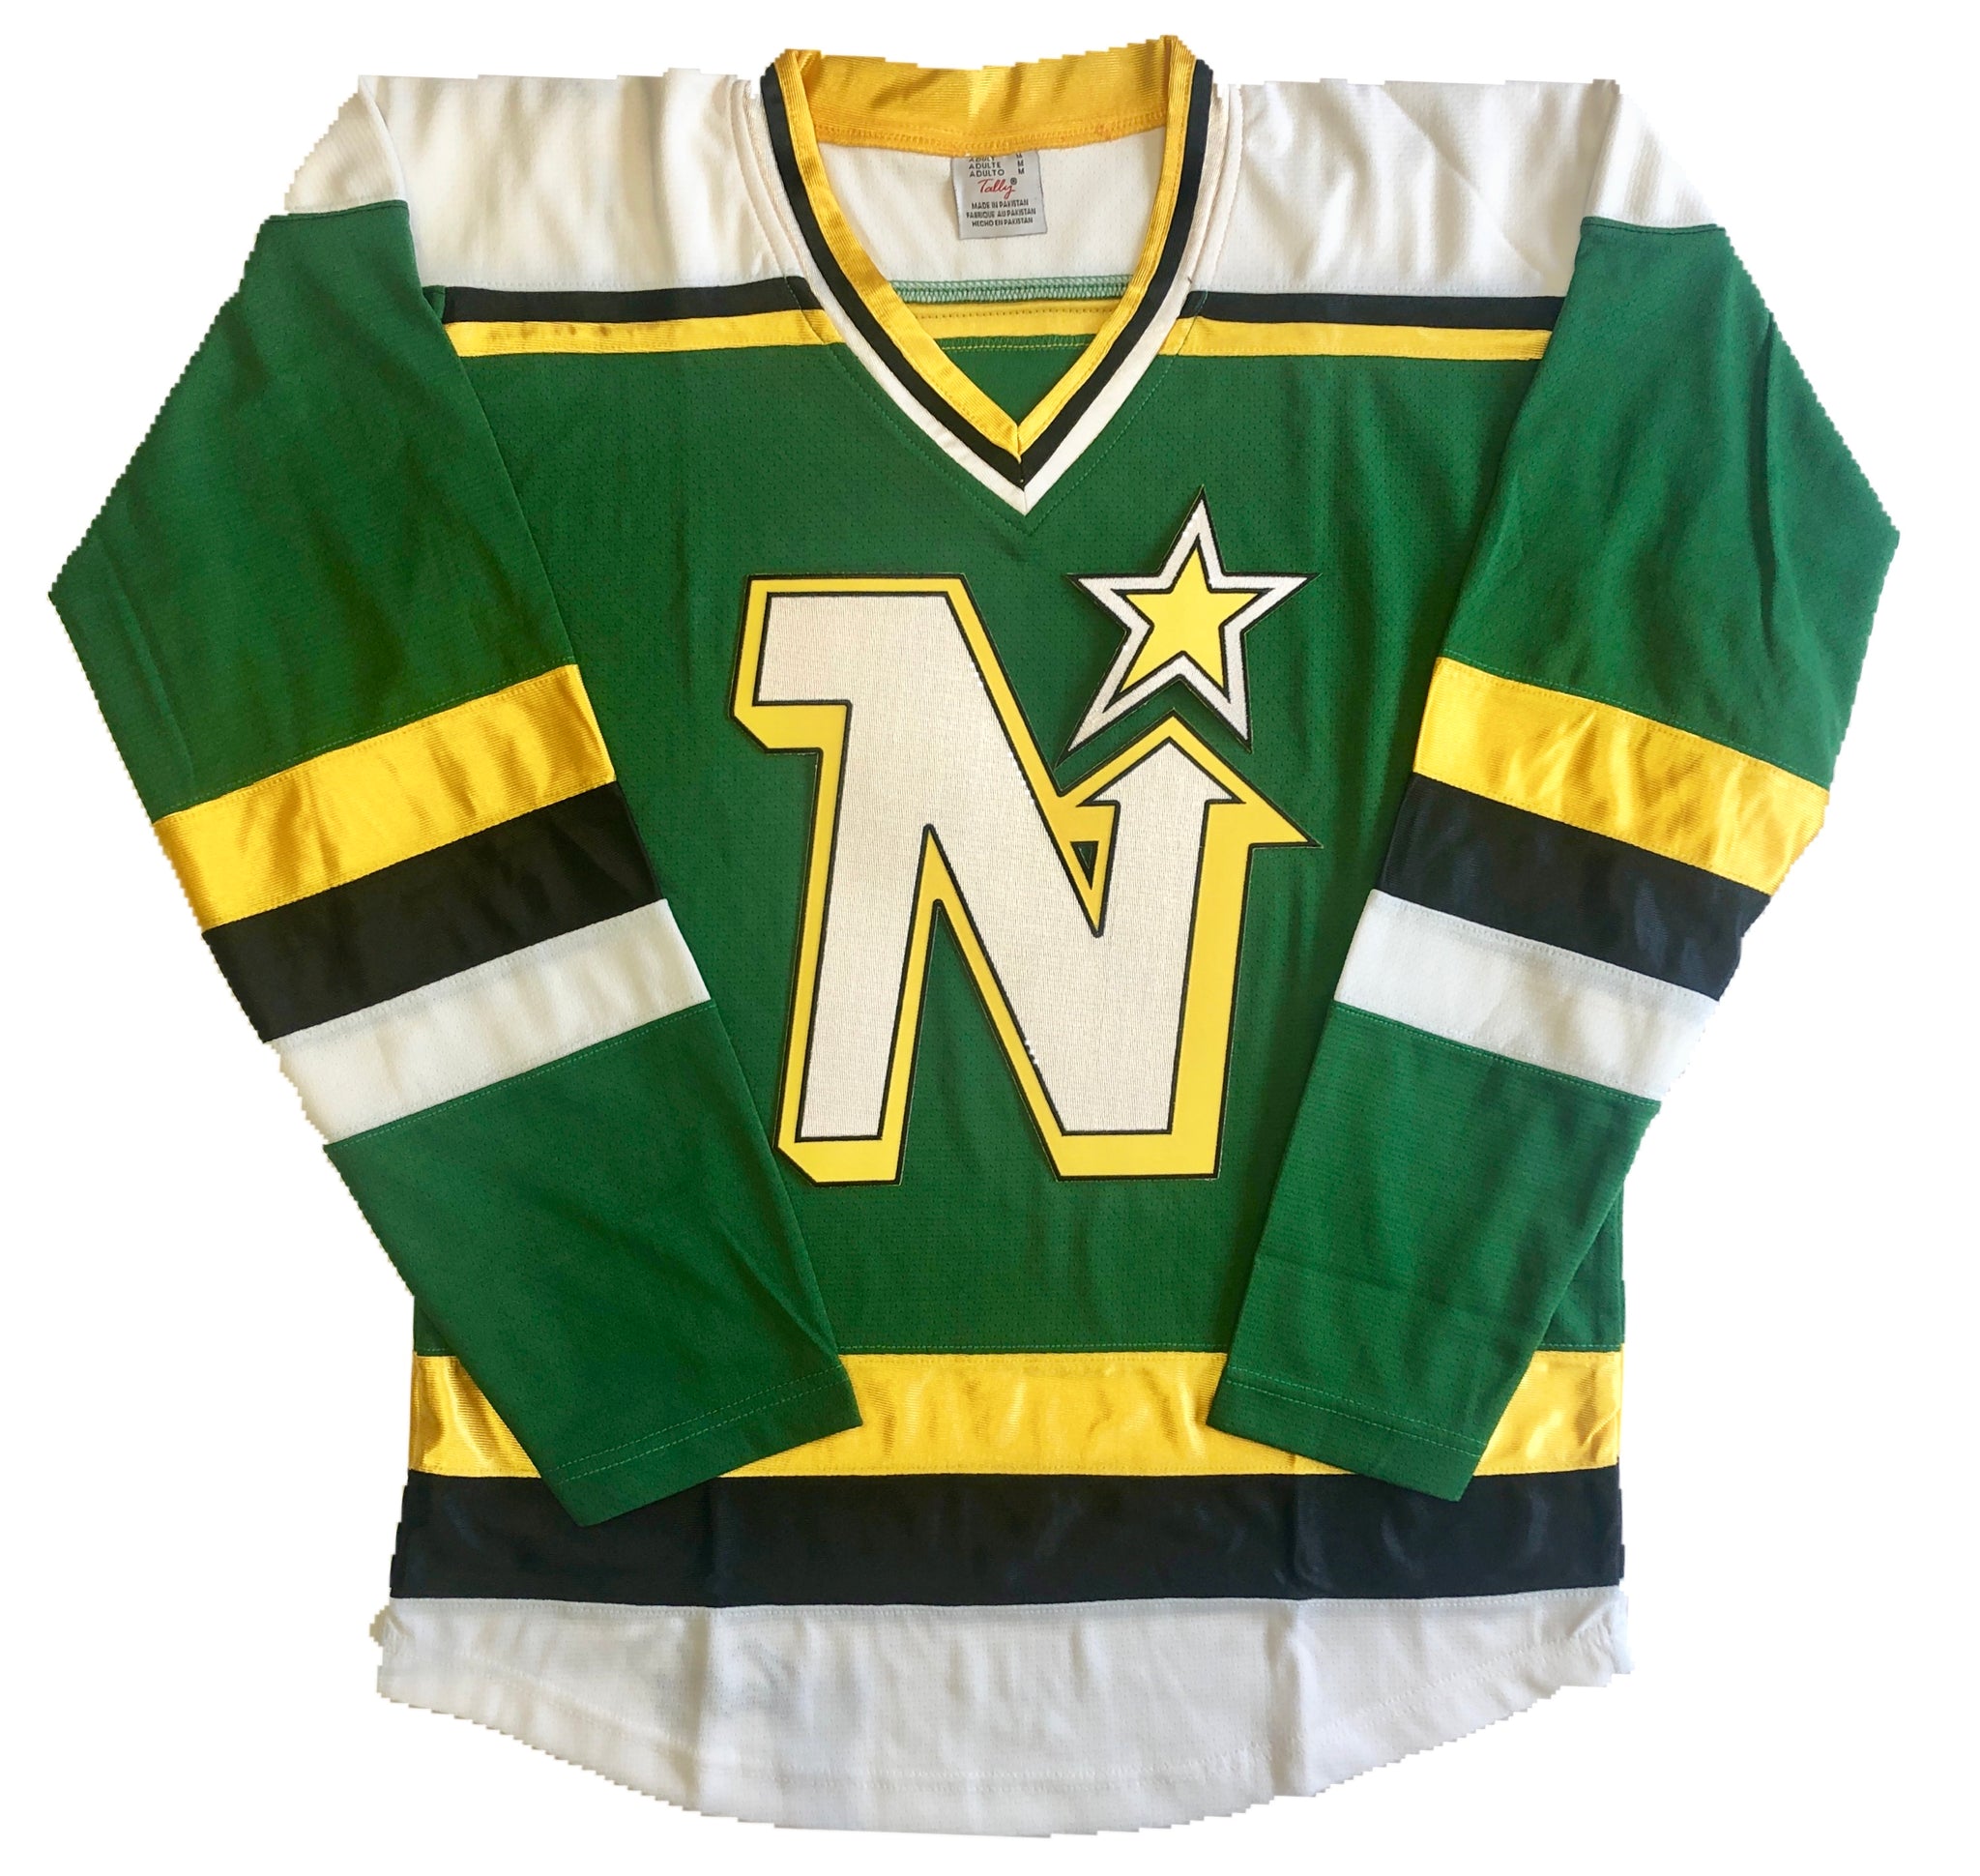 Vintage Hockey Jersey Designs - Custom Hockey Jerseys .co - North